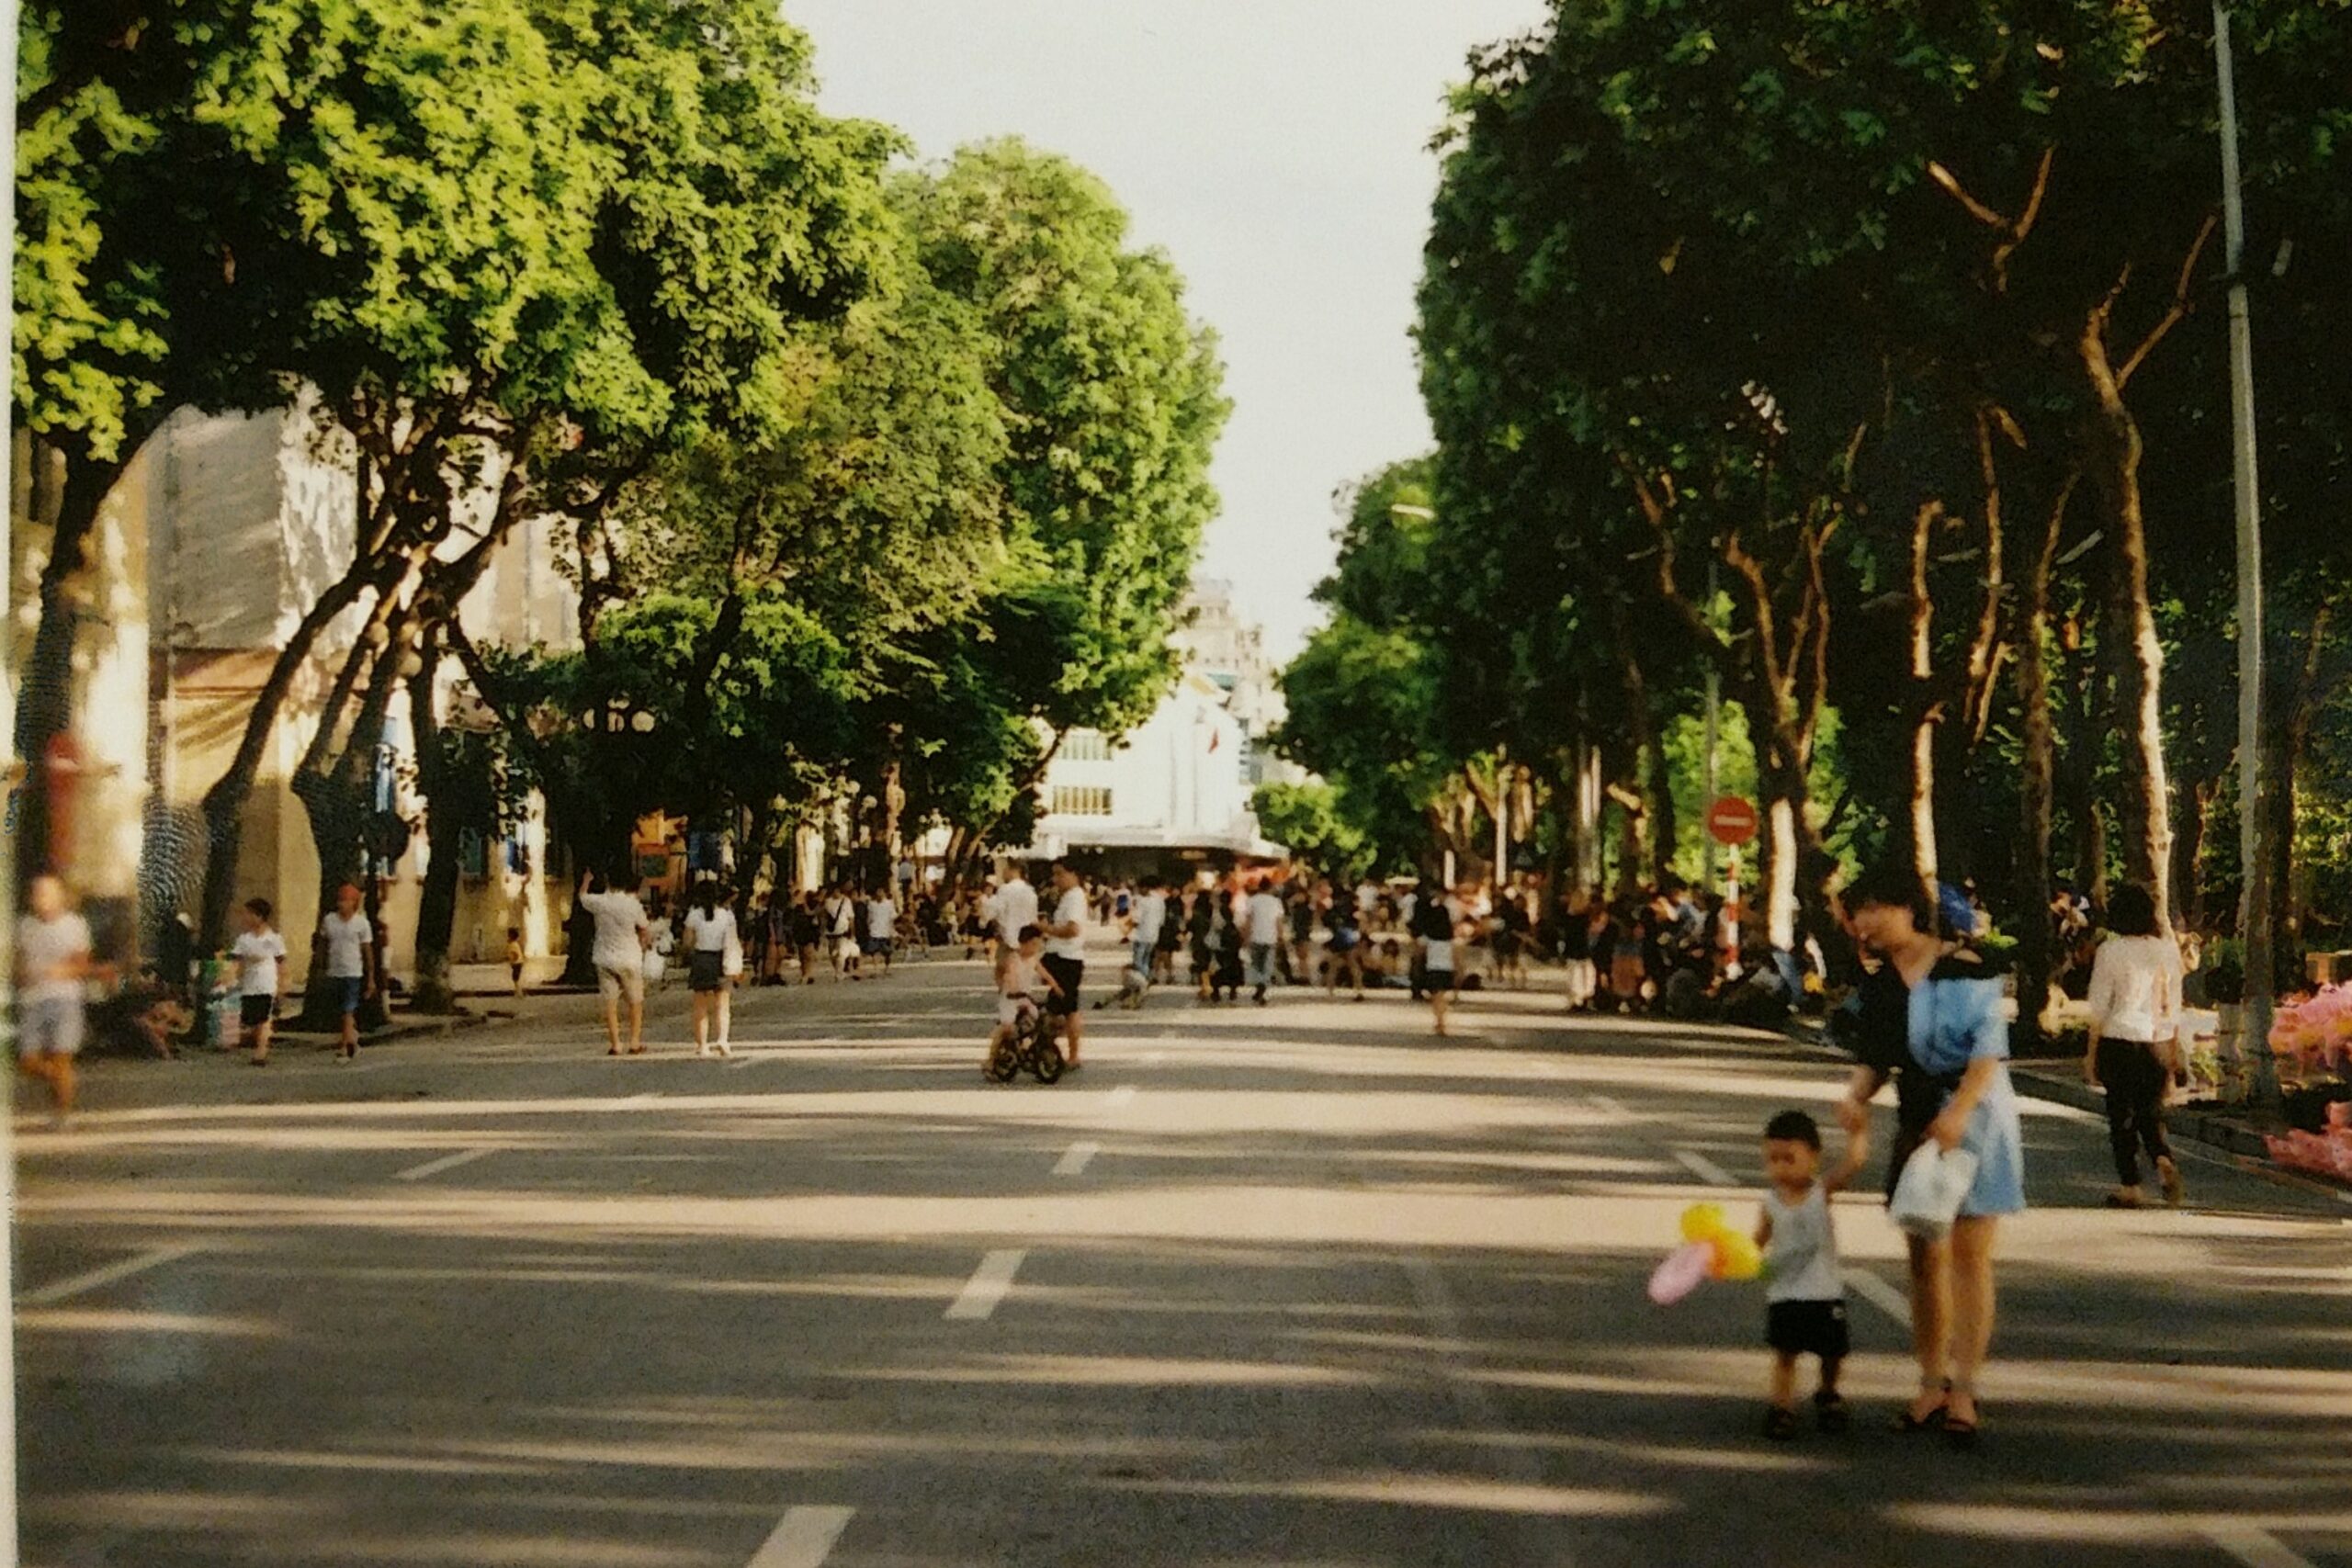 Picture taken in the old quarter, hanoi